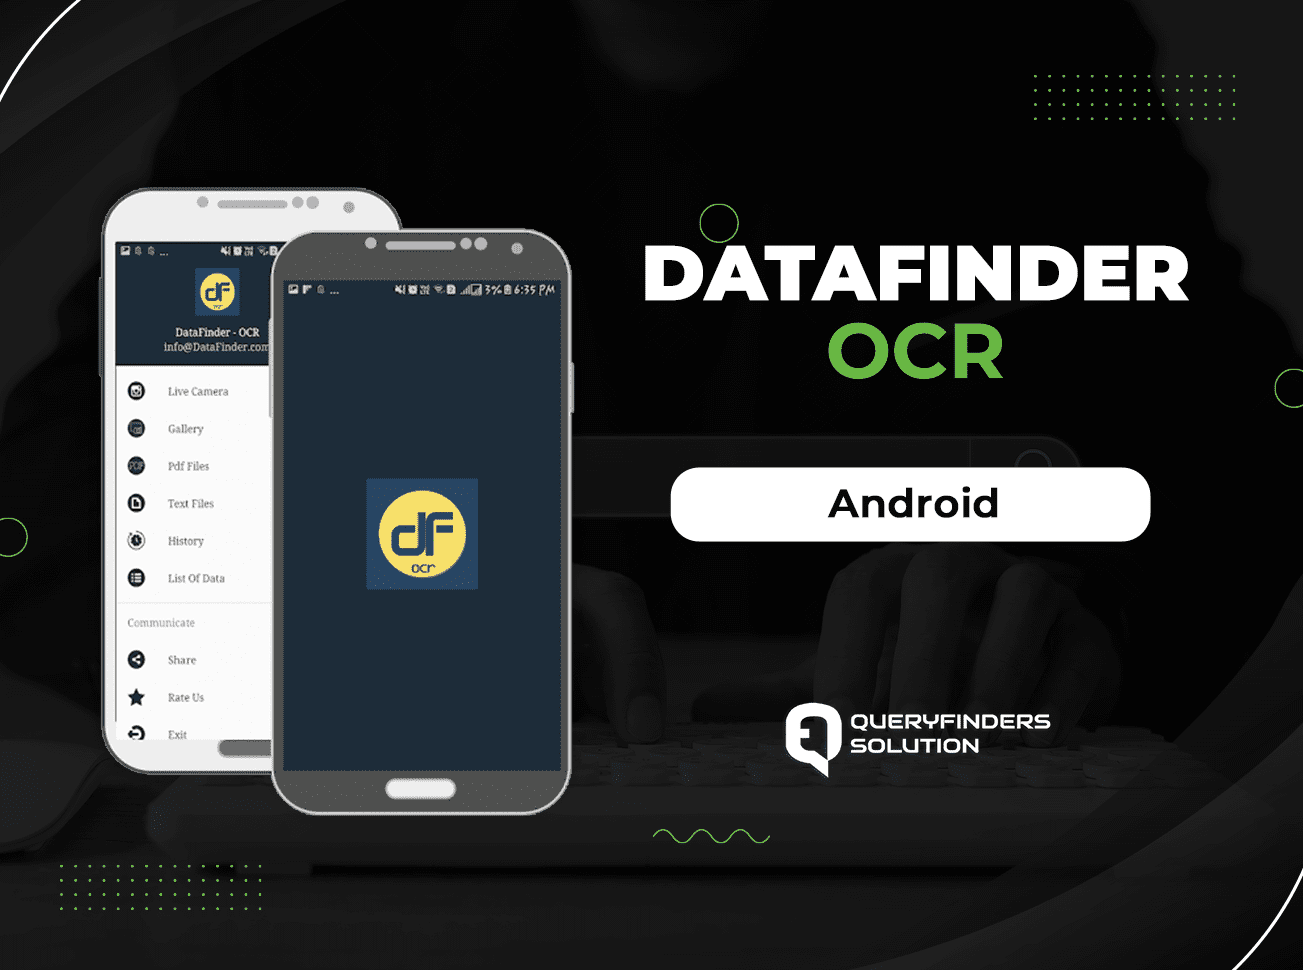 Datafinder OCR